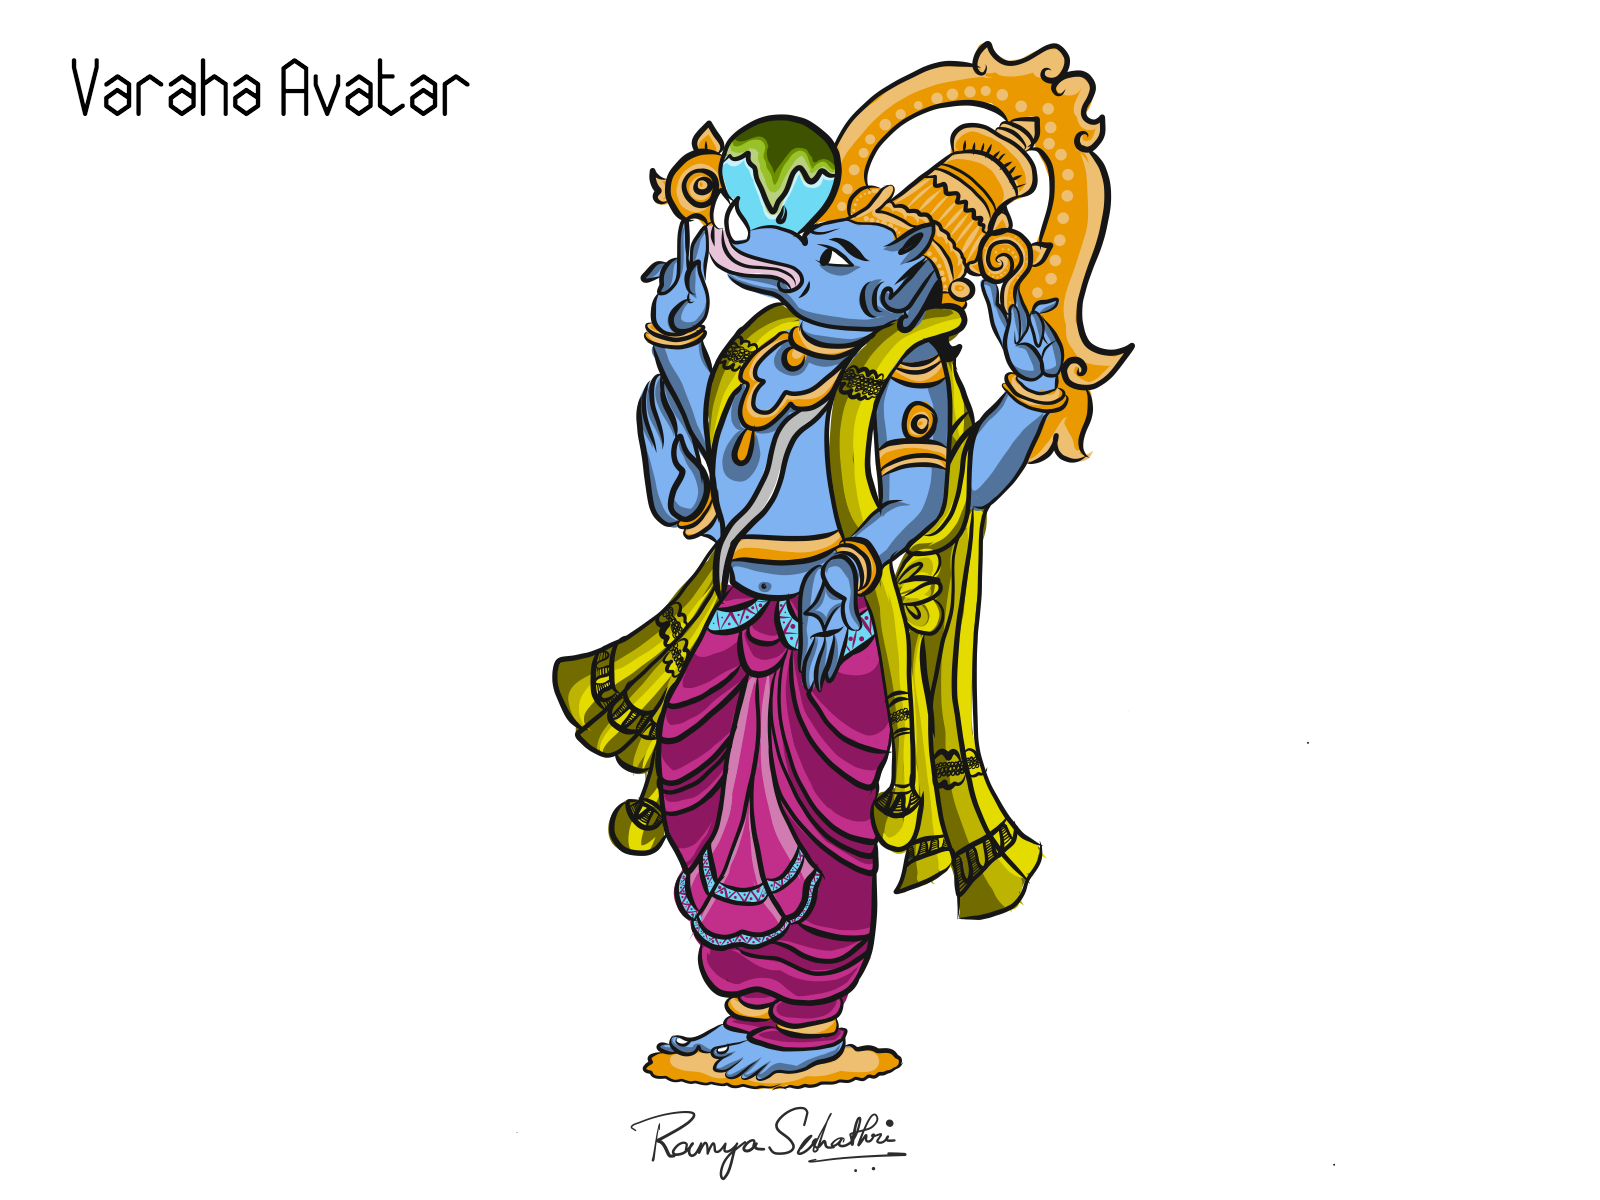 Varaha Avatar by Ramya Seshathri on Dribbble